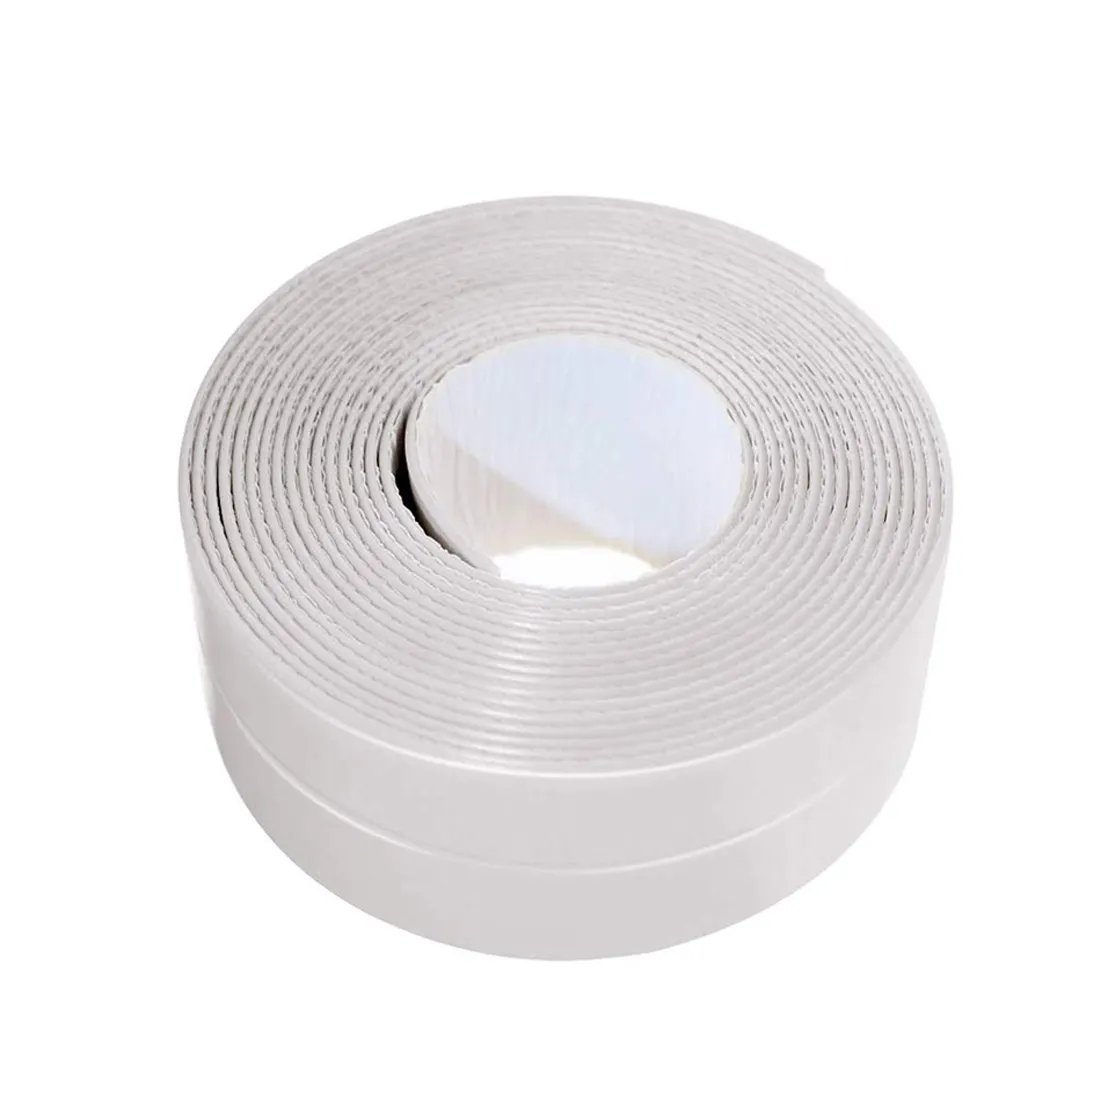 EONBON Free Samples Caulk Strip PE Self Adhesive Tape